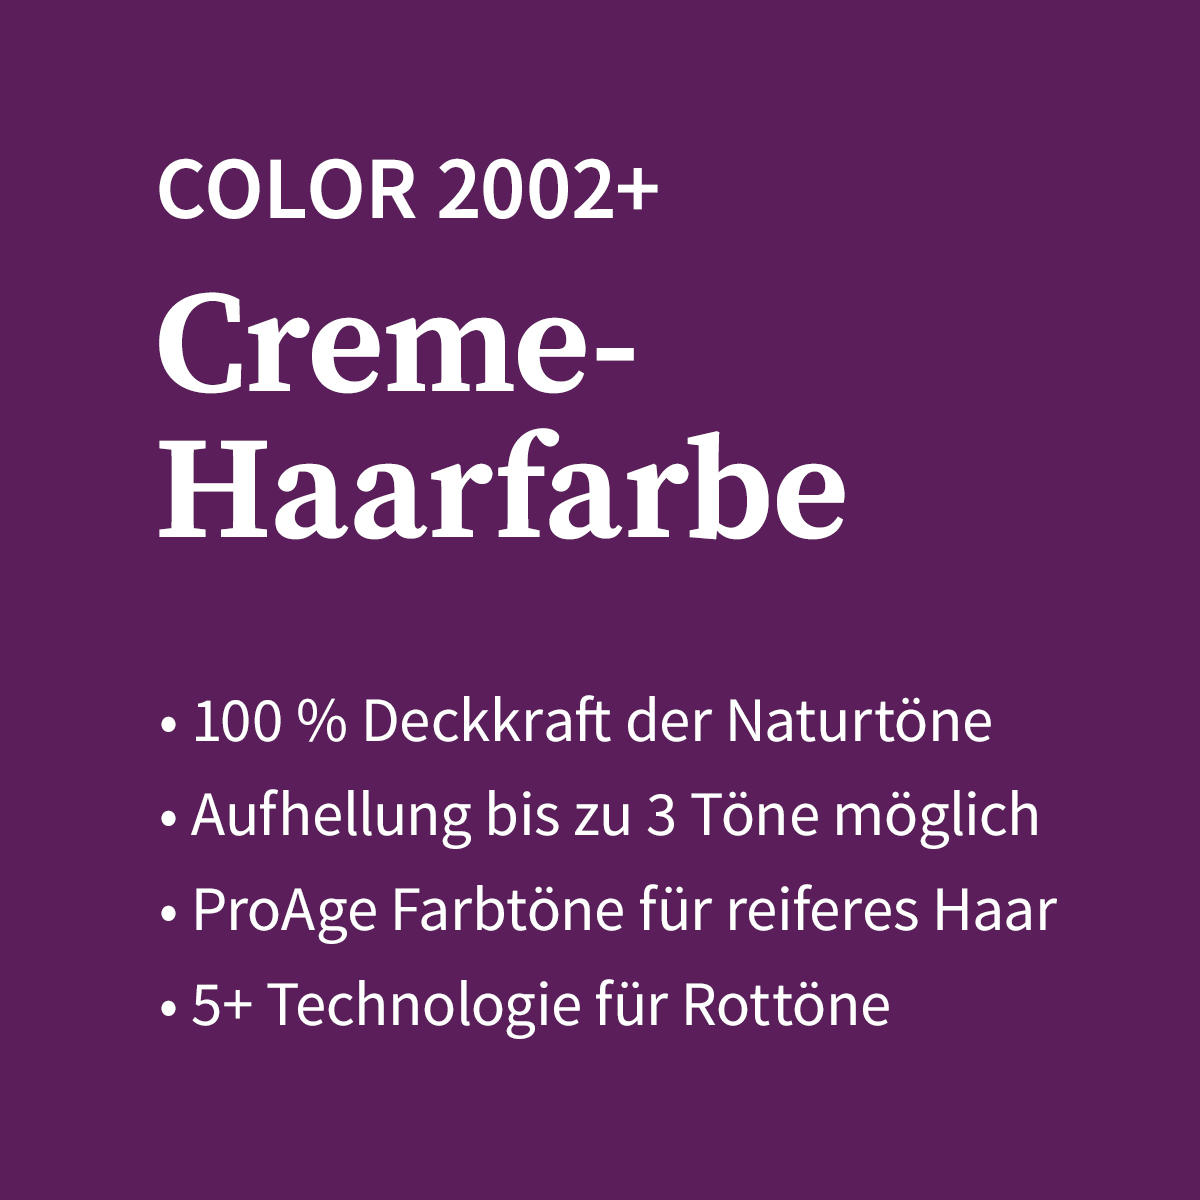 Basler Color 2002+ Color de pelo crema 7/74 rojo rubio medio - palisandro claro, tubo 60 ml - 4